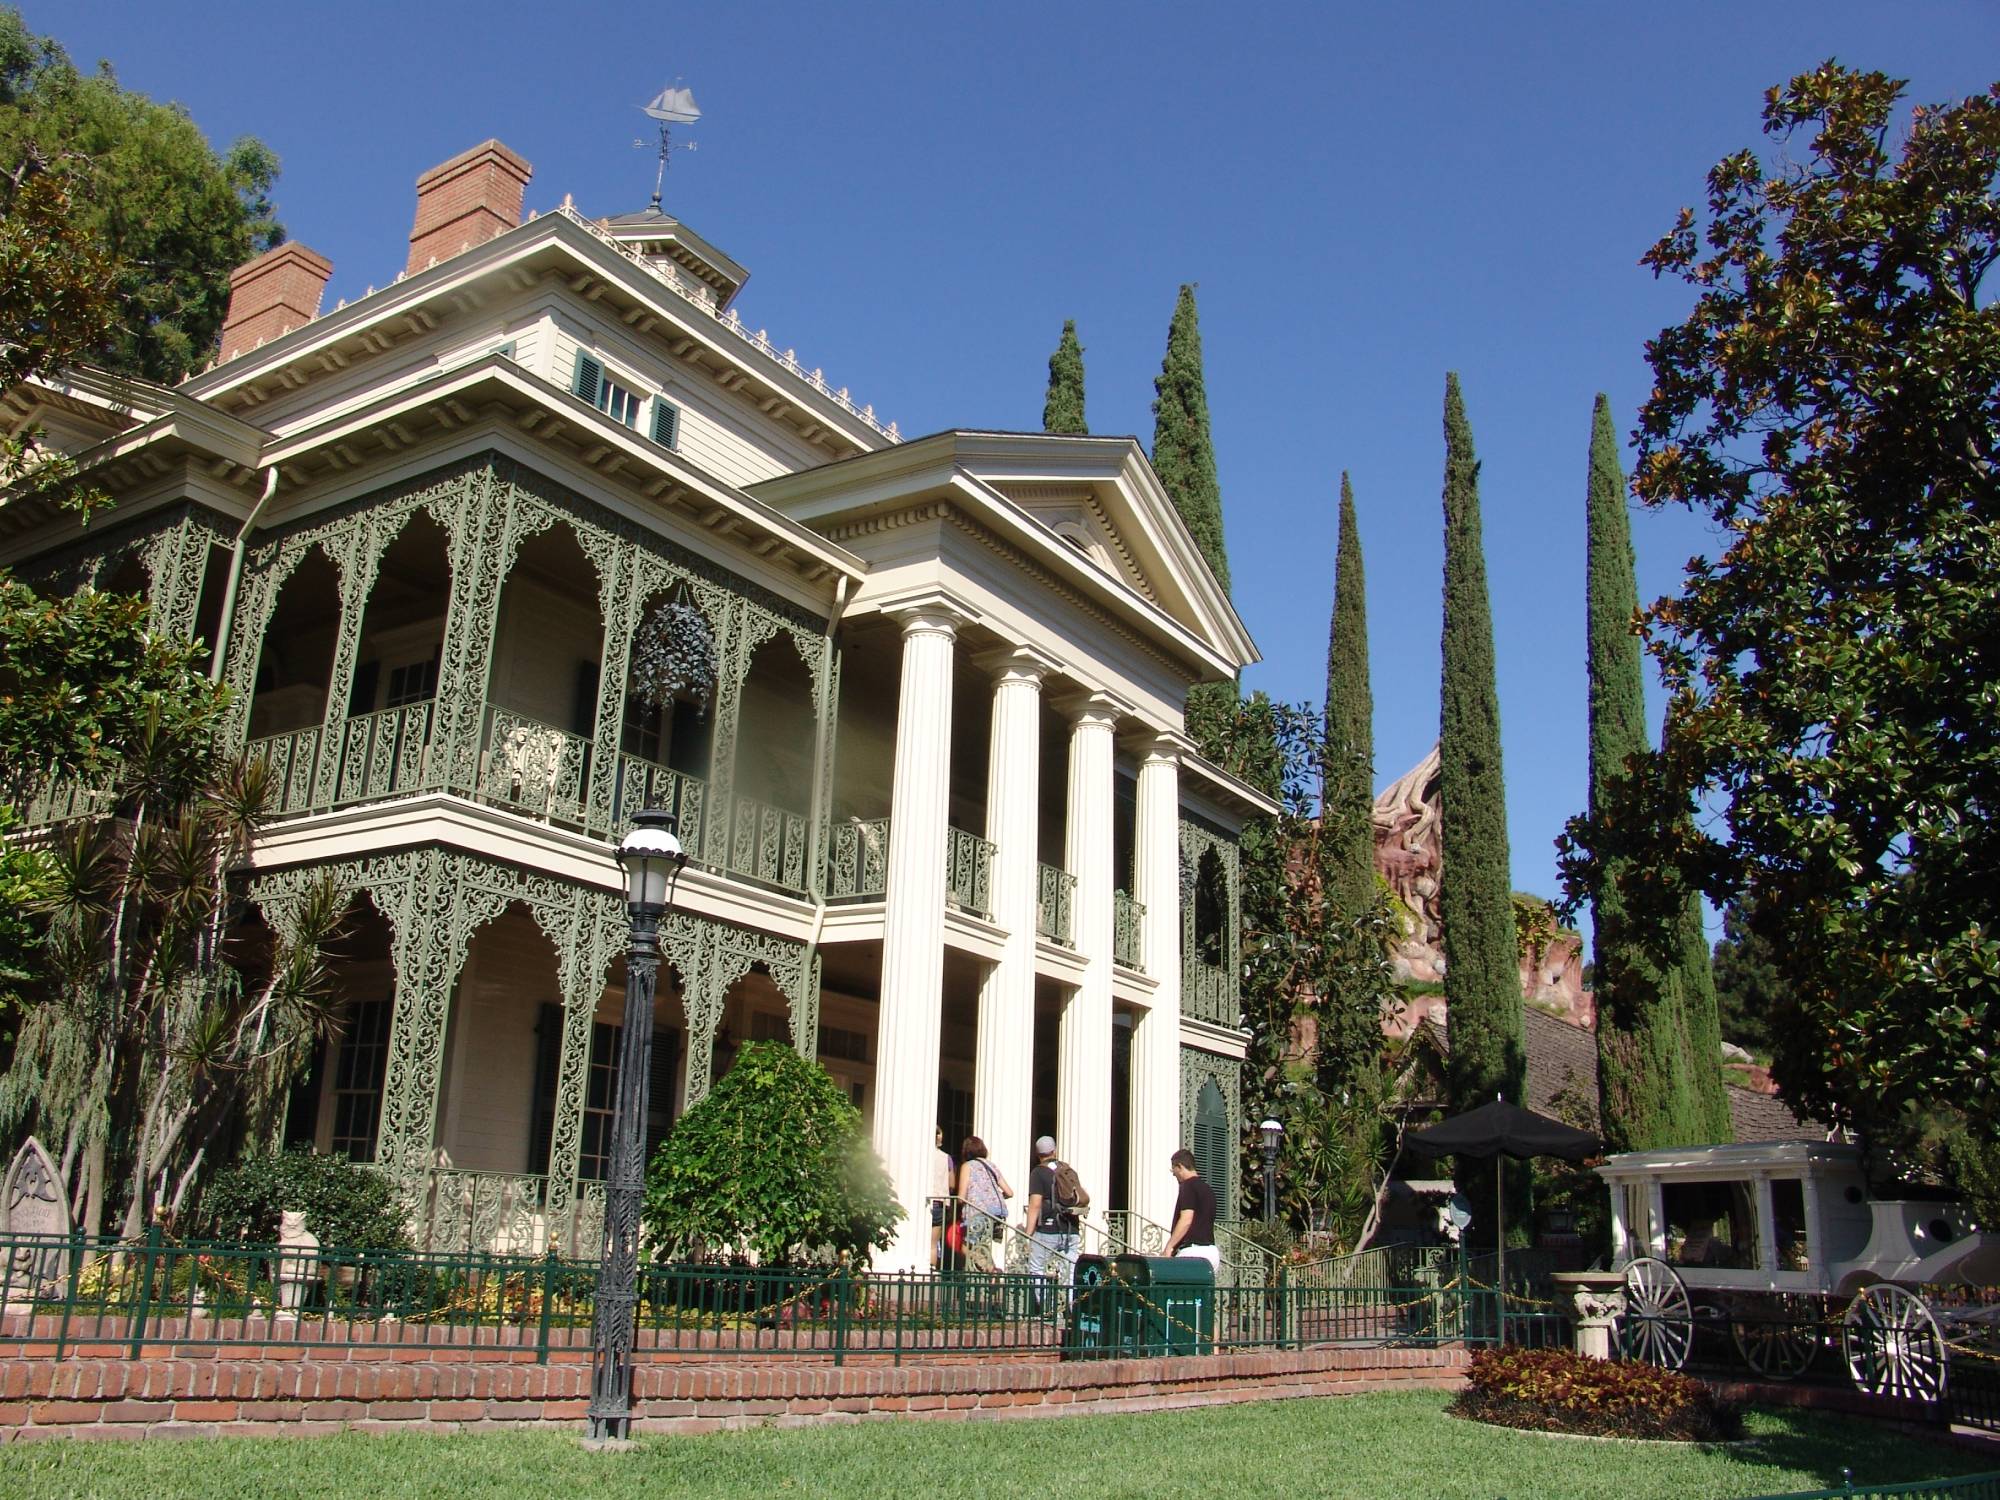 Disneyland - Haunted Mansion